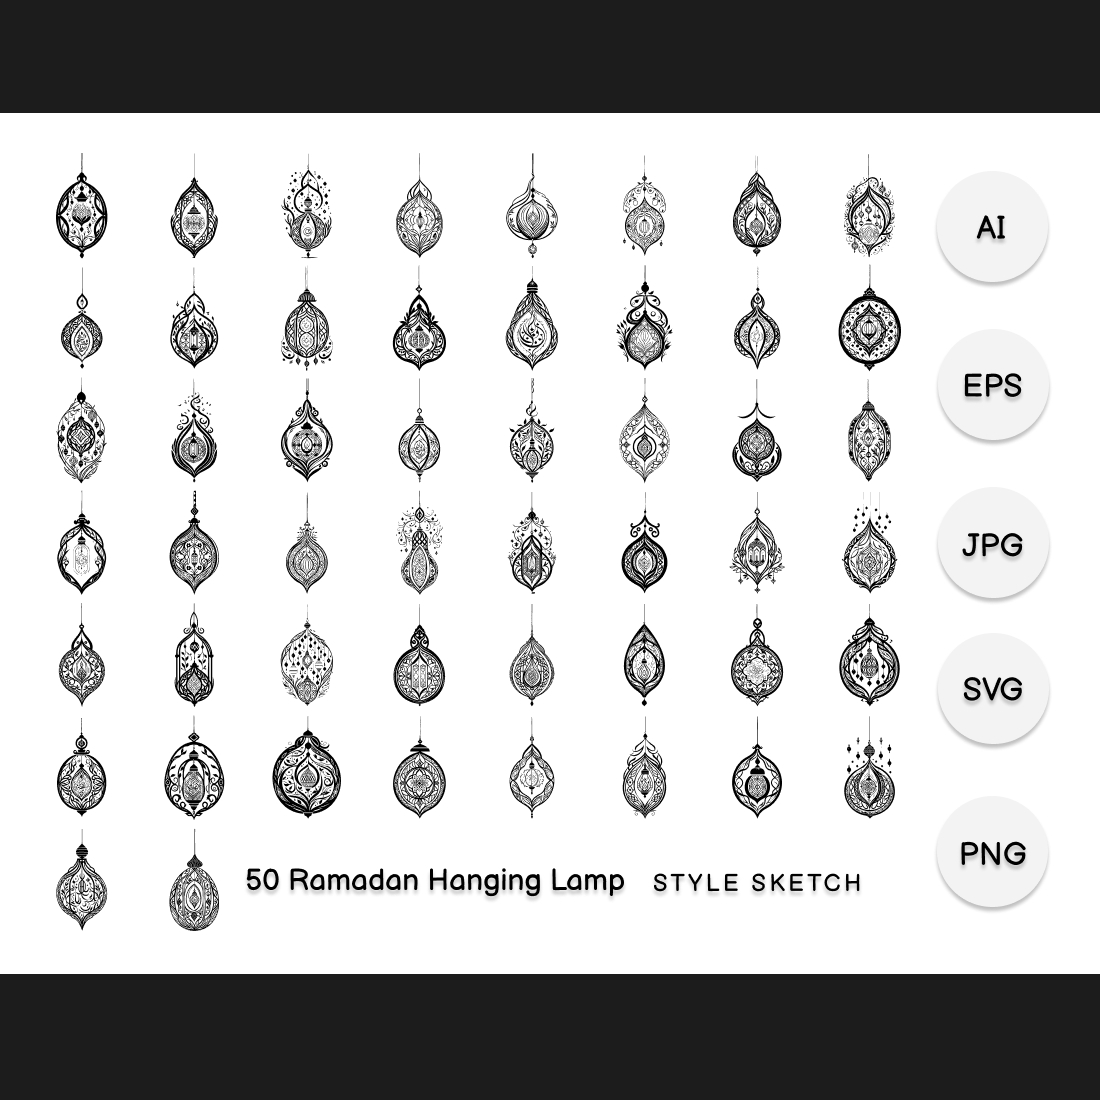 Ramadan Hanging Lamp Element Draw Black cover image.